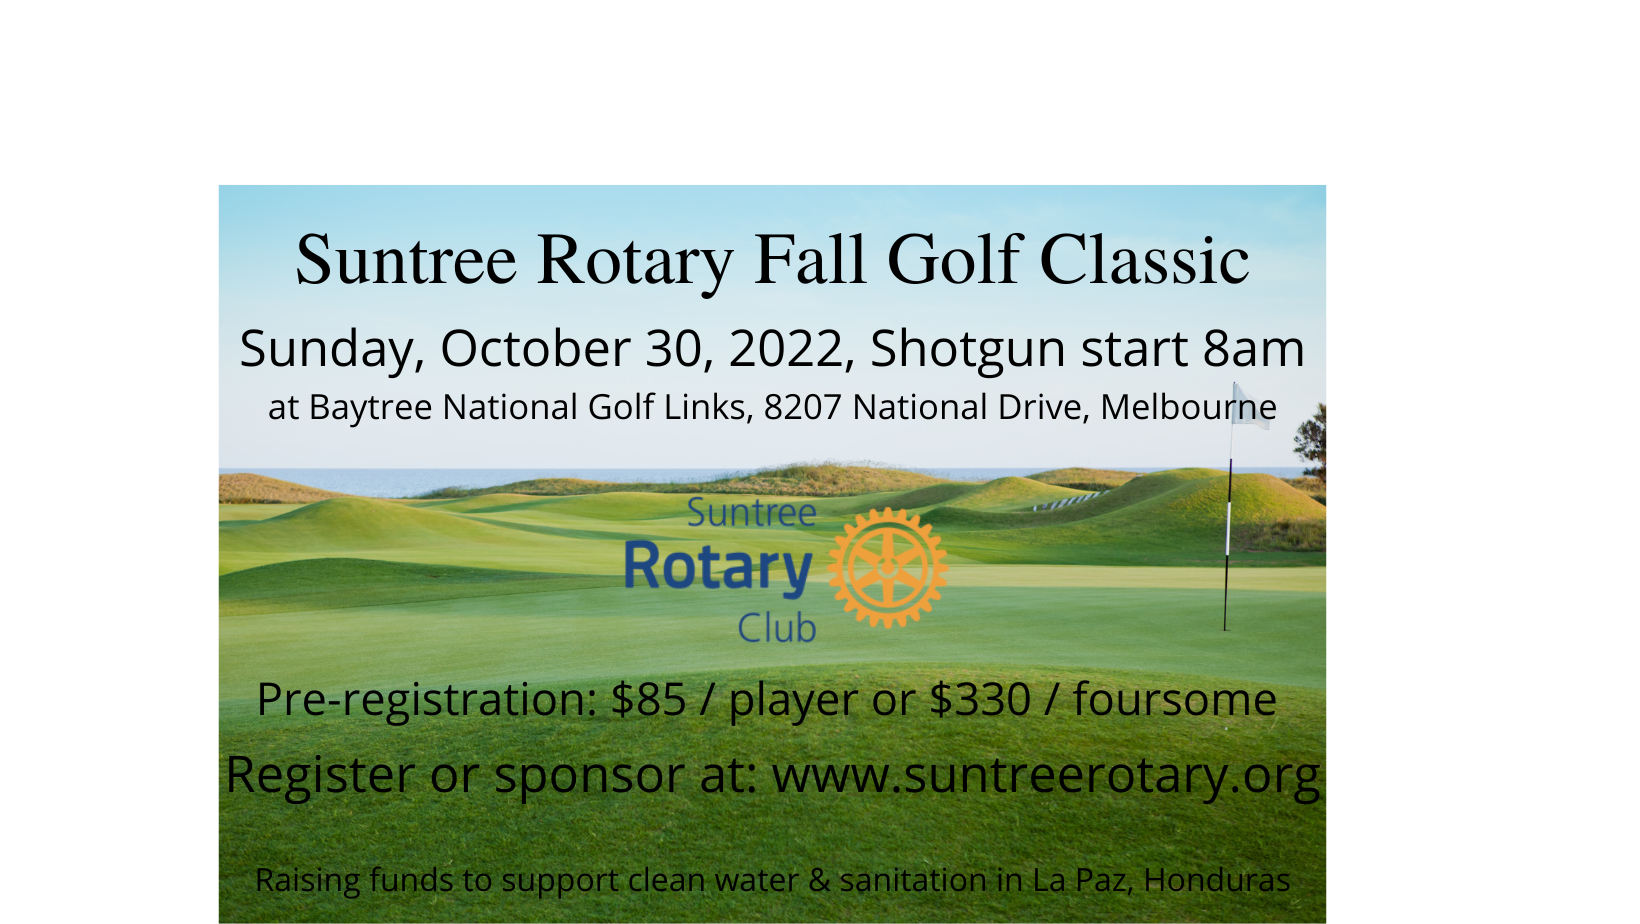 Suntree Rotary Fall Golf Classic